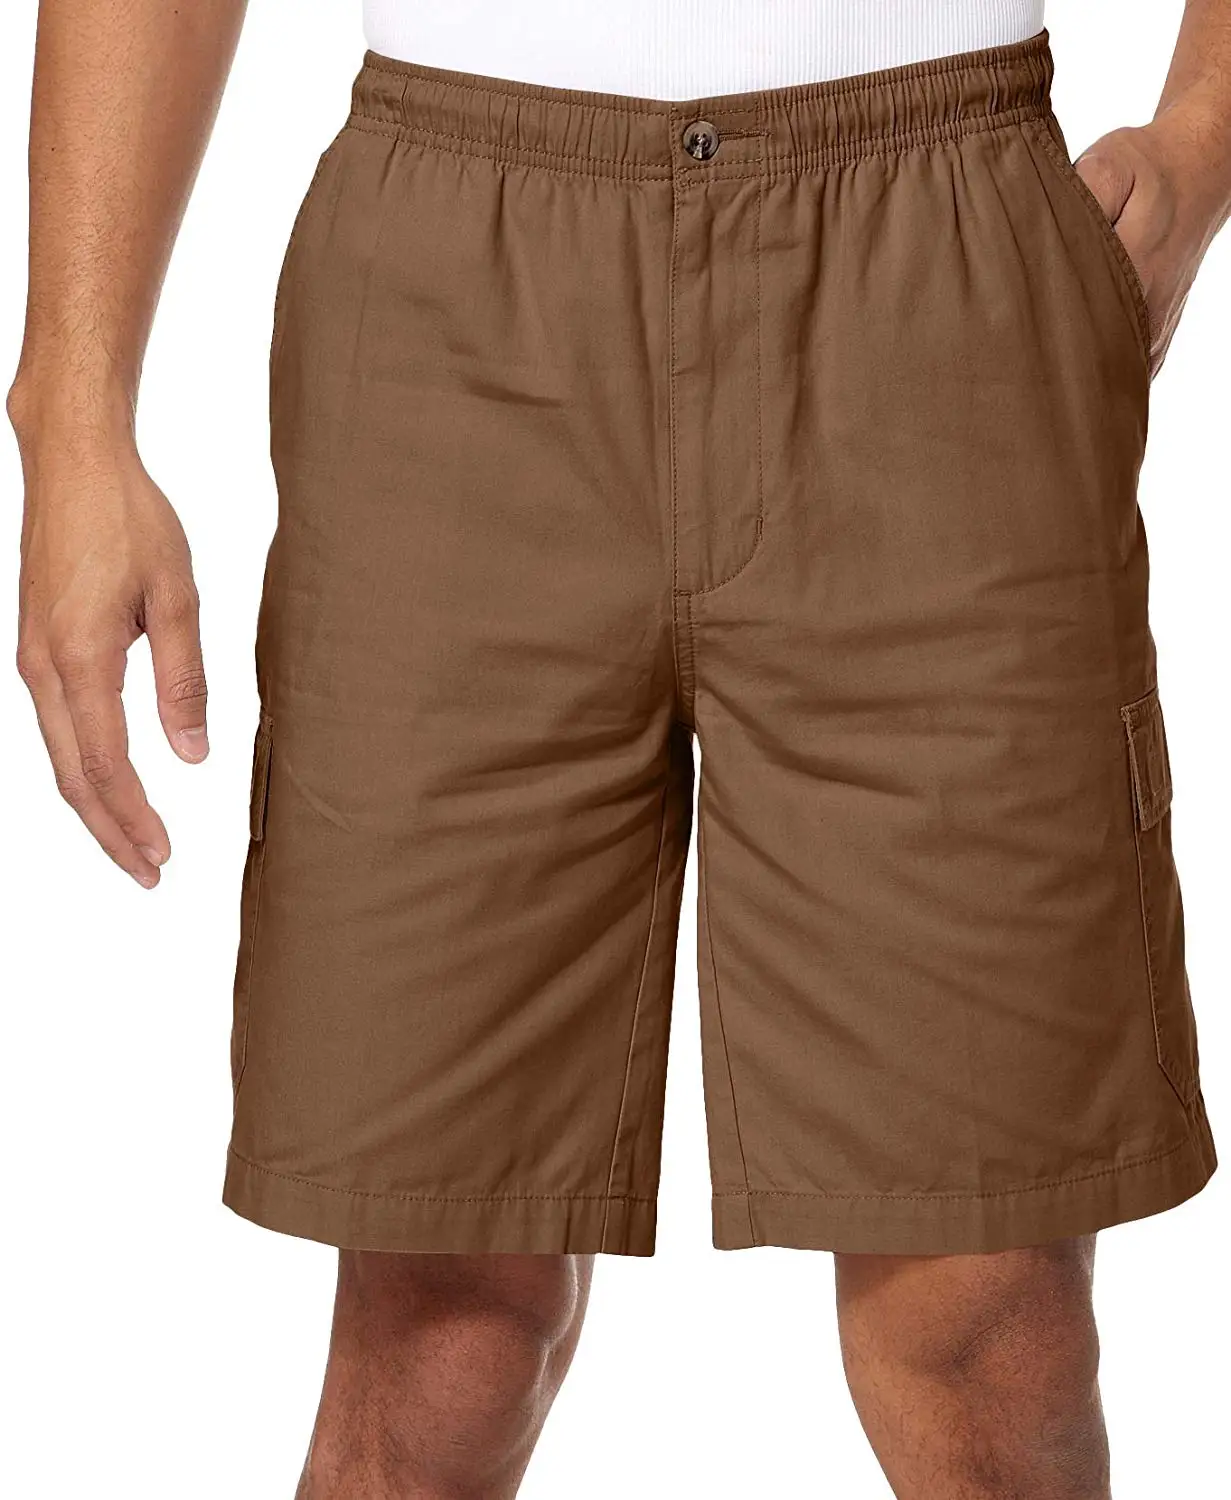 Buy Windham Pointe 7 Inch Inseam Elastic Waist Shorts in Cheap Price on ...